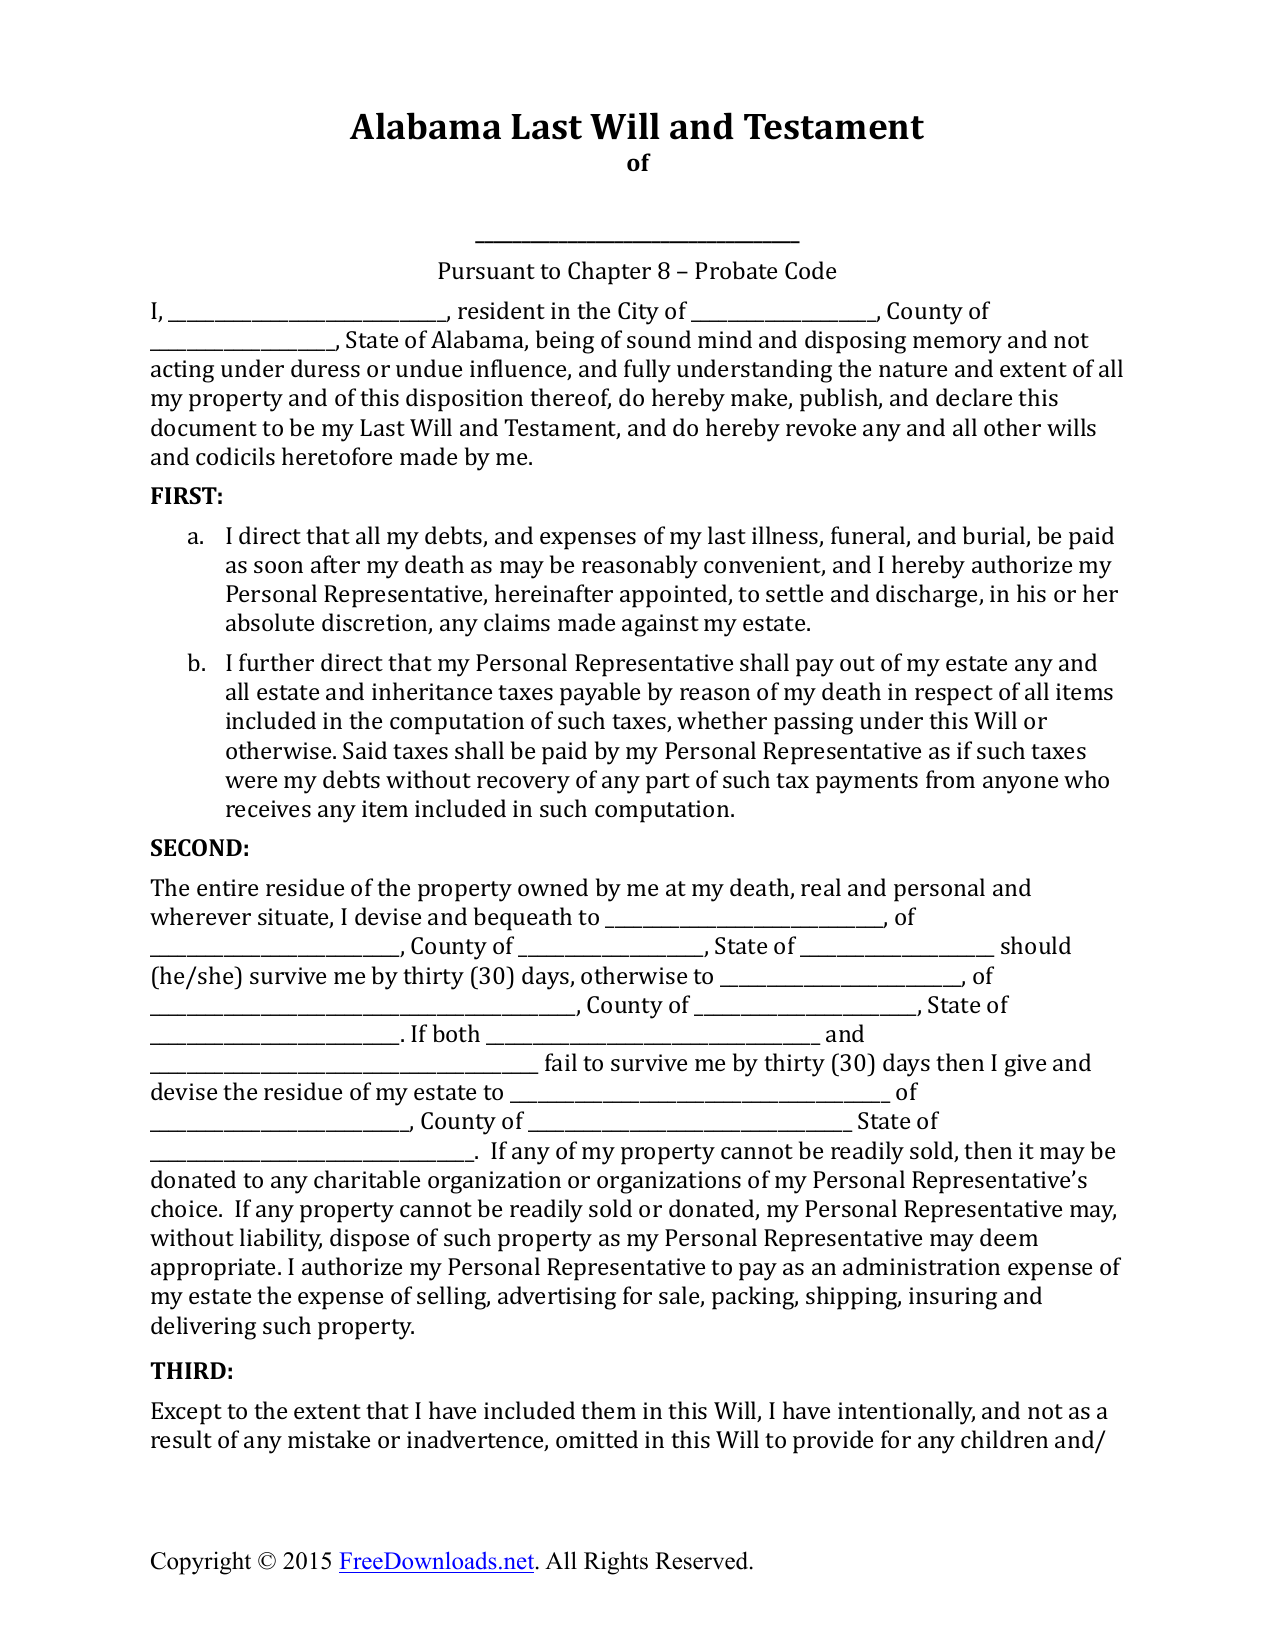 Download Alabama Last Will and Testament Form PDF RTF Word